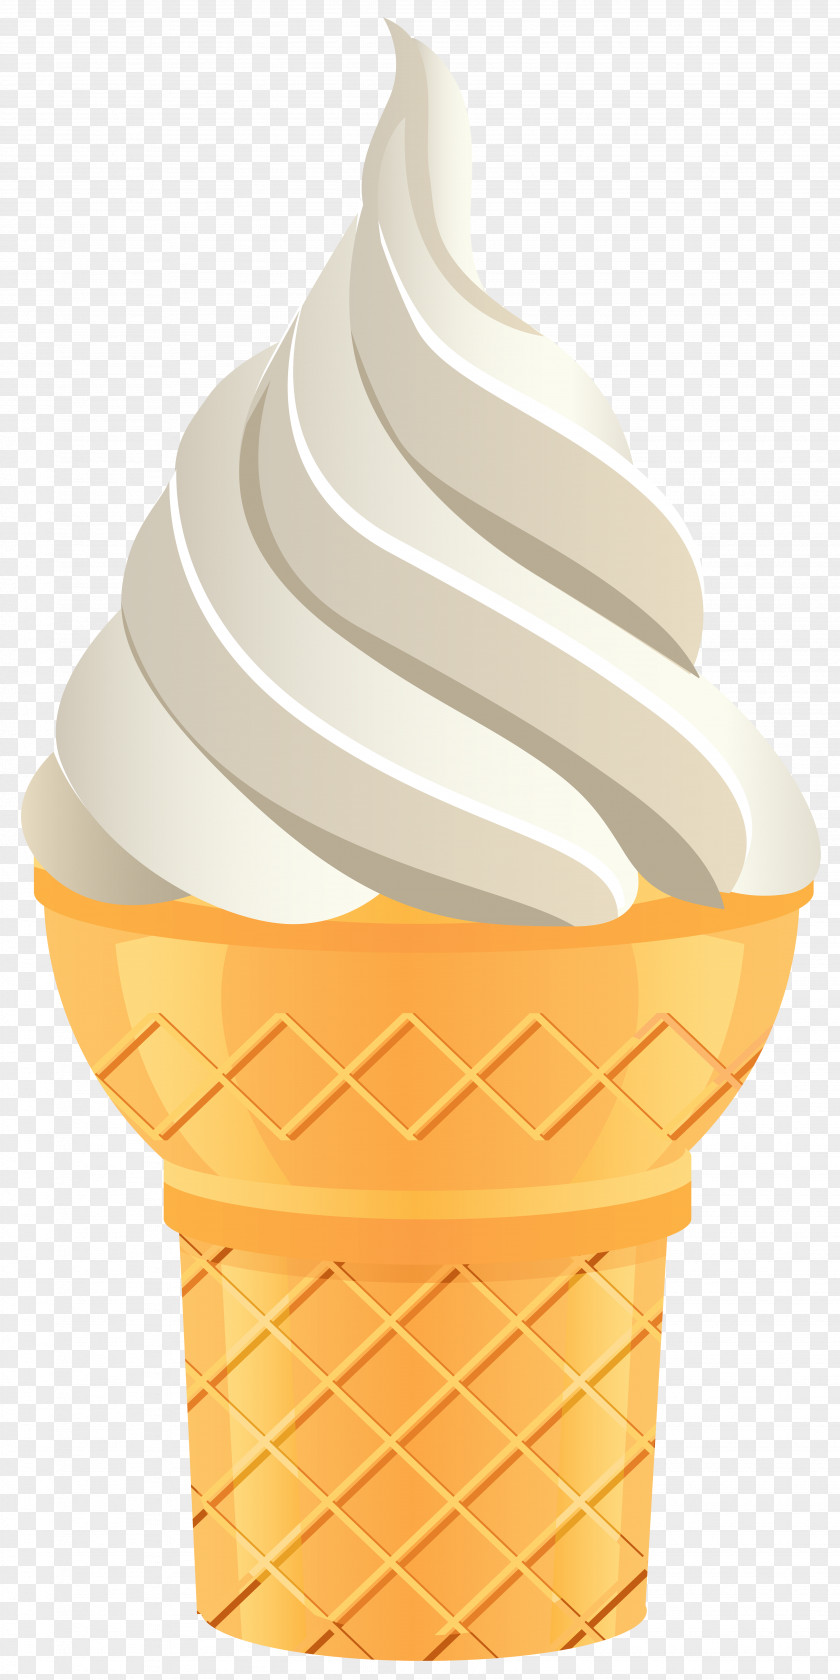 Vanilla Ice Cream Cone Transparent Clip Art Image Flavor Cup PNG